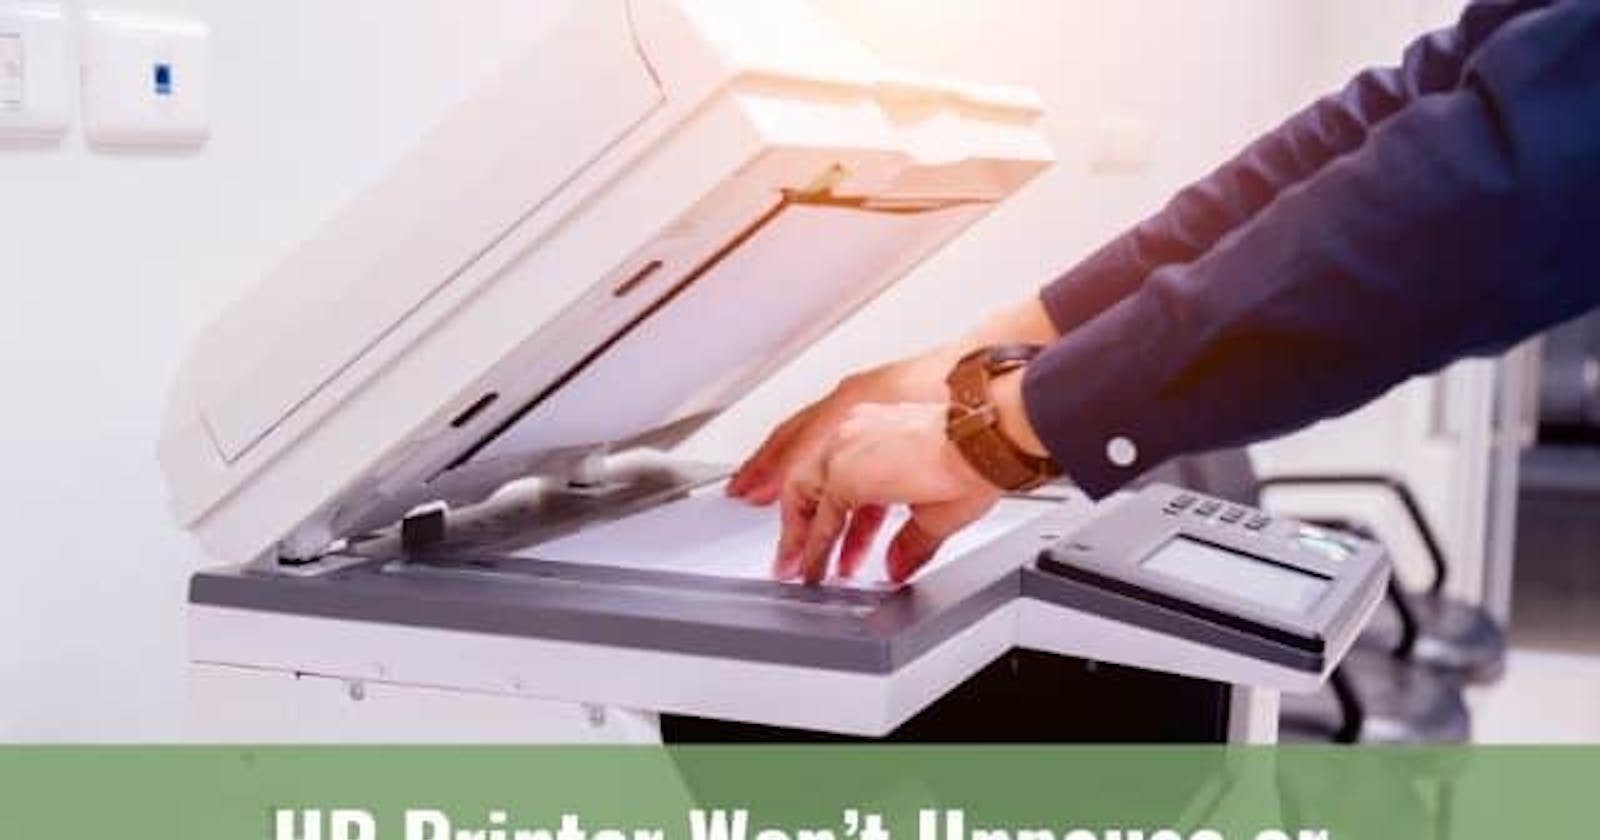 How Do I Cancel Print Jobs on HP Printers?